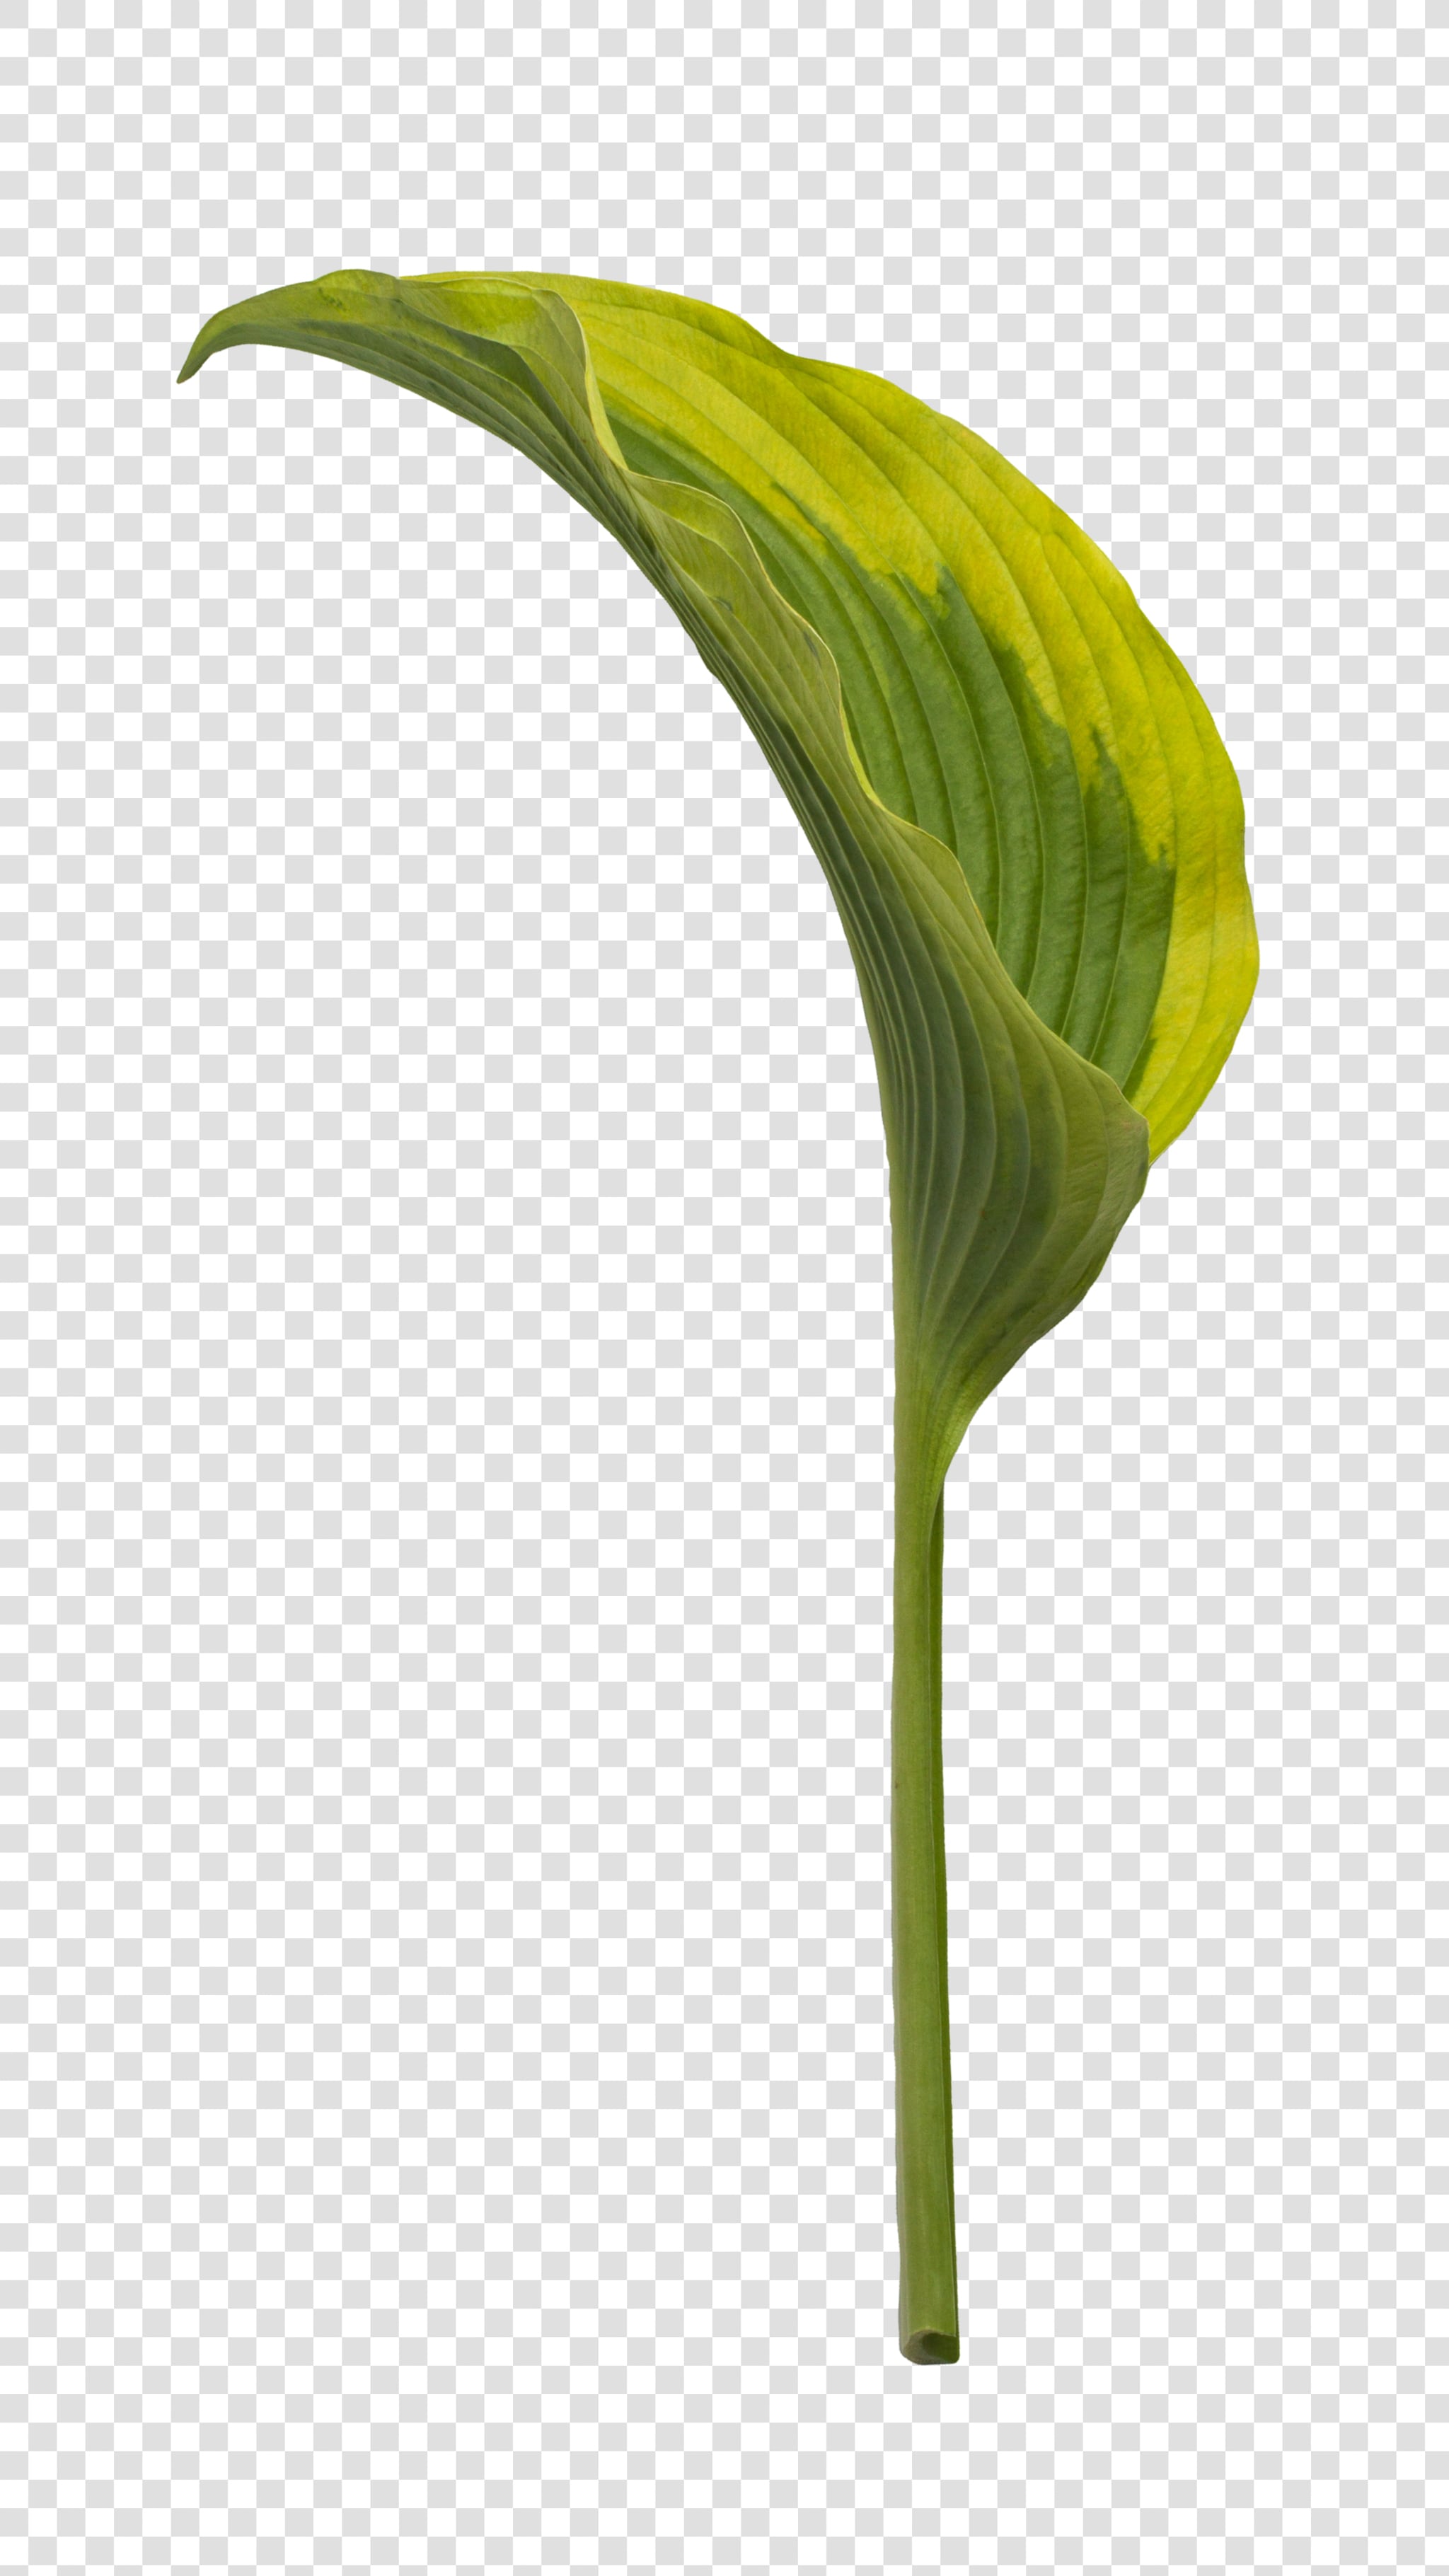 Leaf PSD layered image